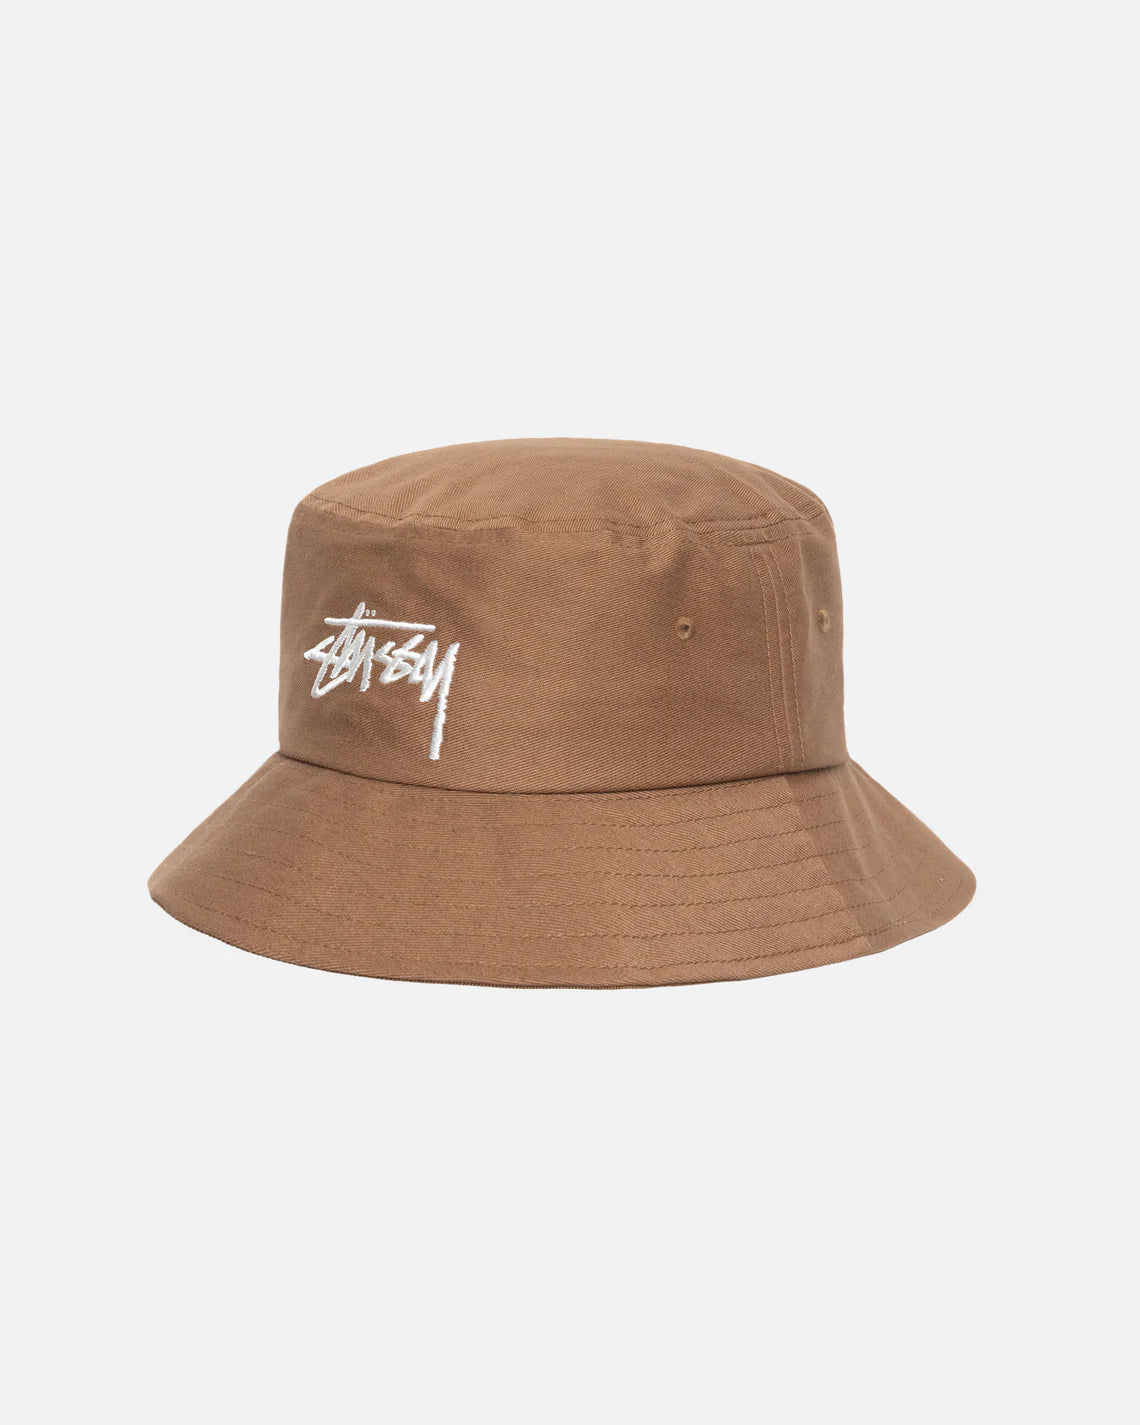 Stüssy Big Stock Bucket Hat Tan